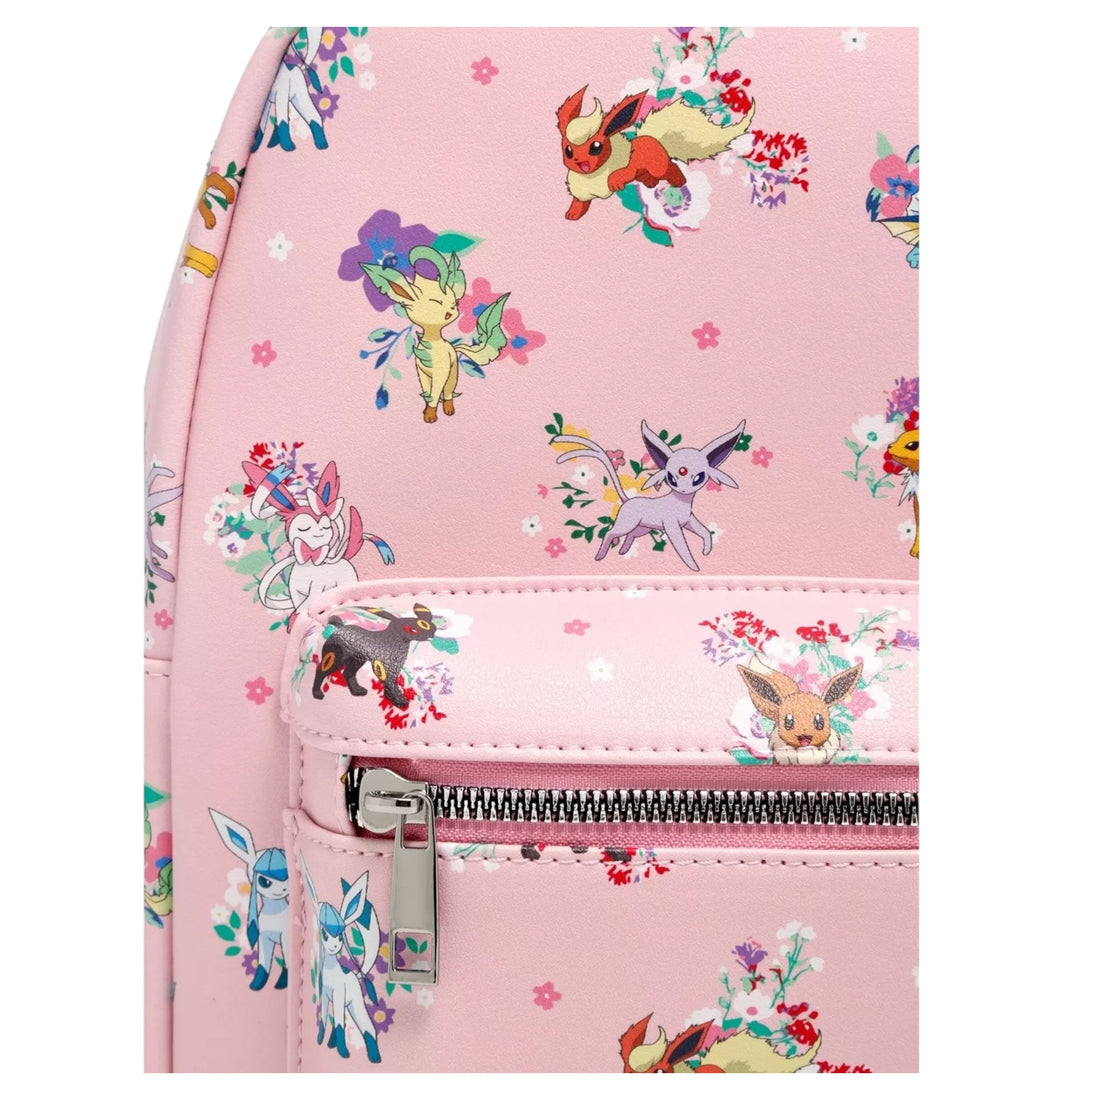 Bioworld Pokemon Eeveelution Flowers Mini Backpack